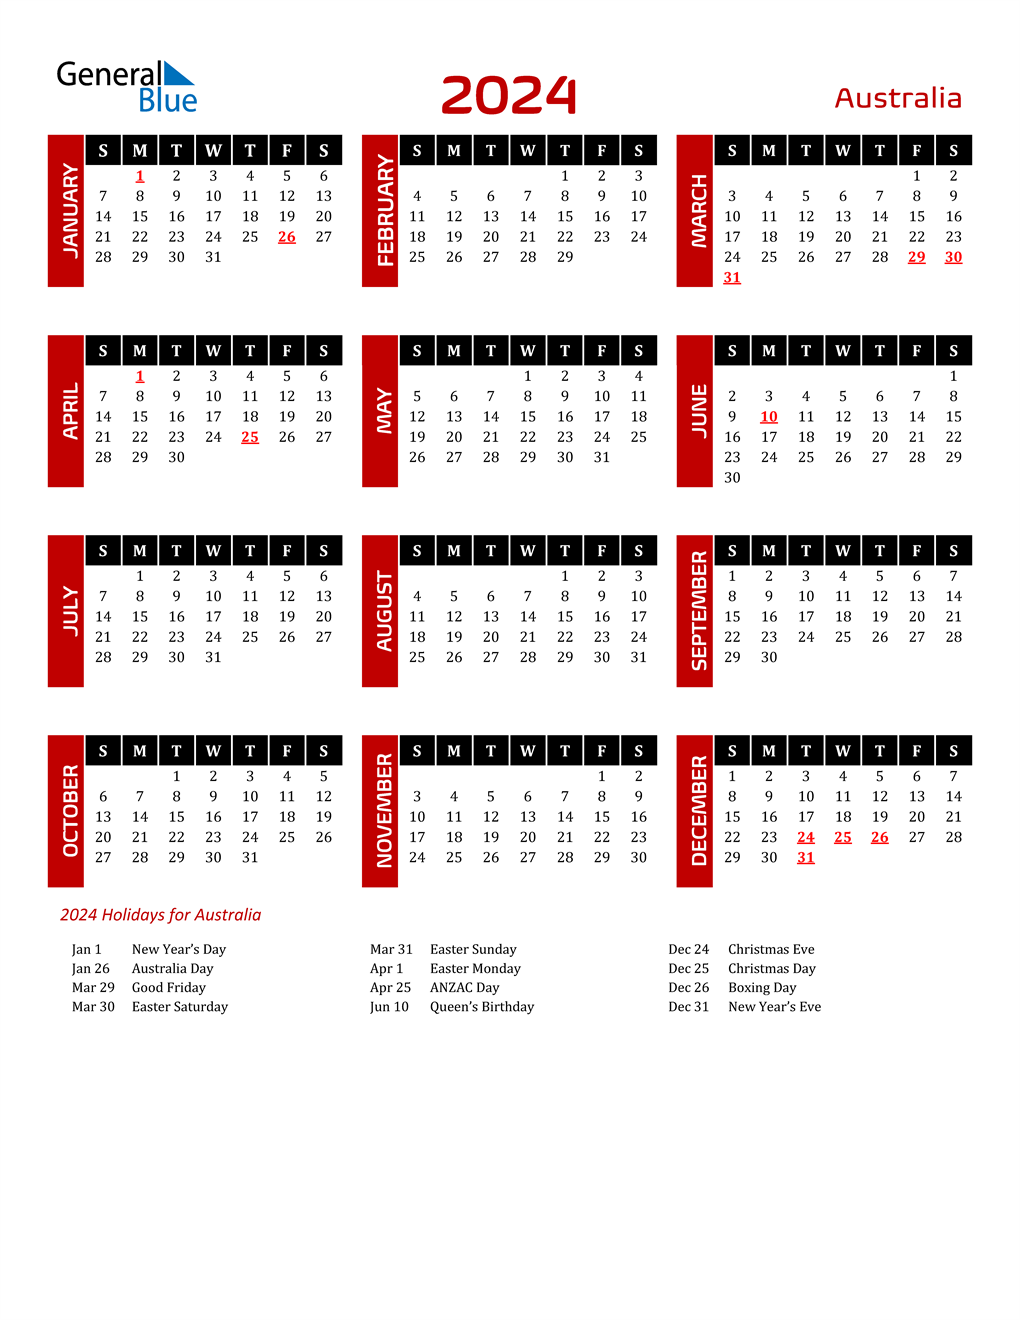 holidays-for-2024-calendar-latest-top-popular-list-of-ramadan-2024